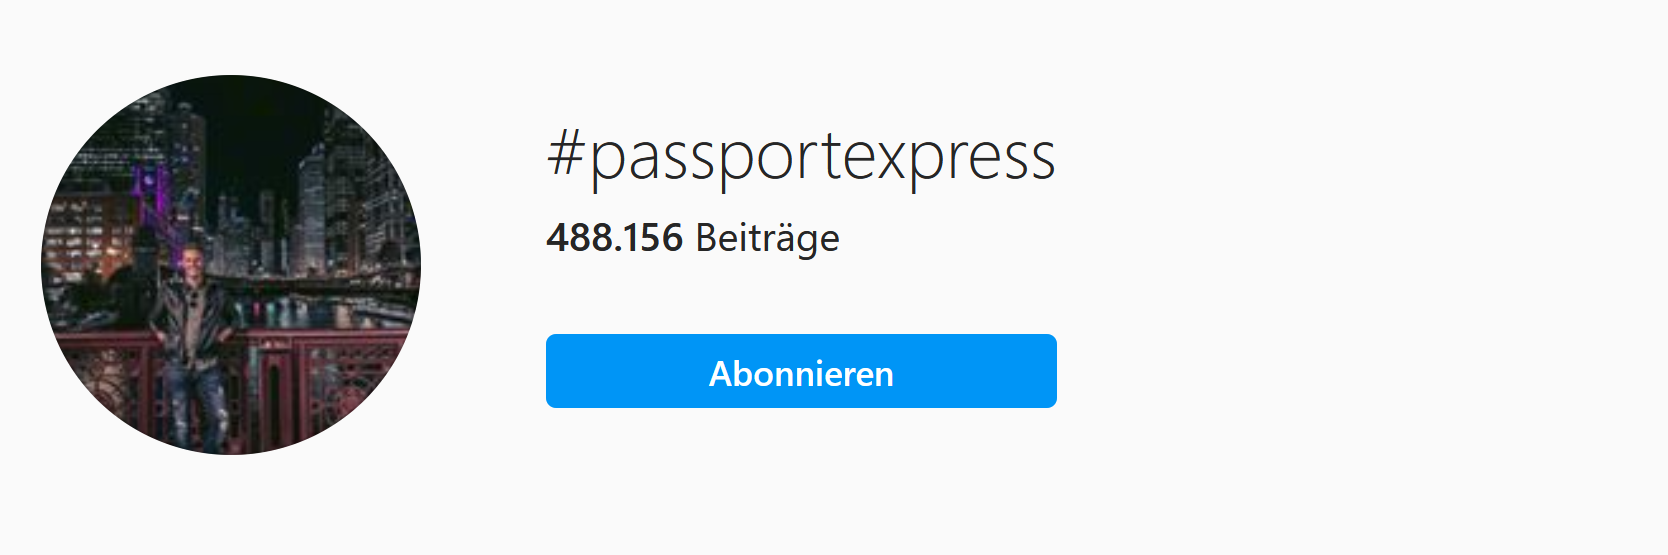 Hashtags: Passportexpress